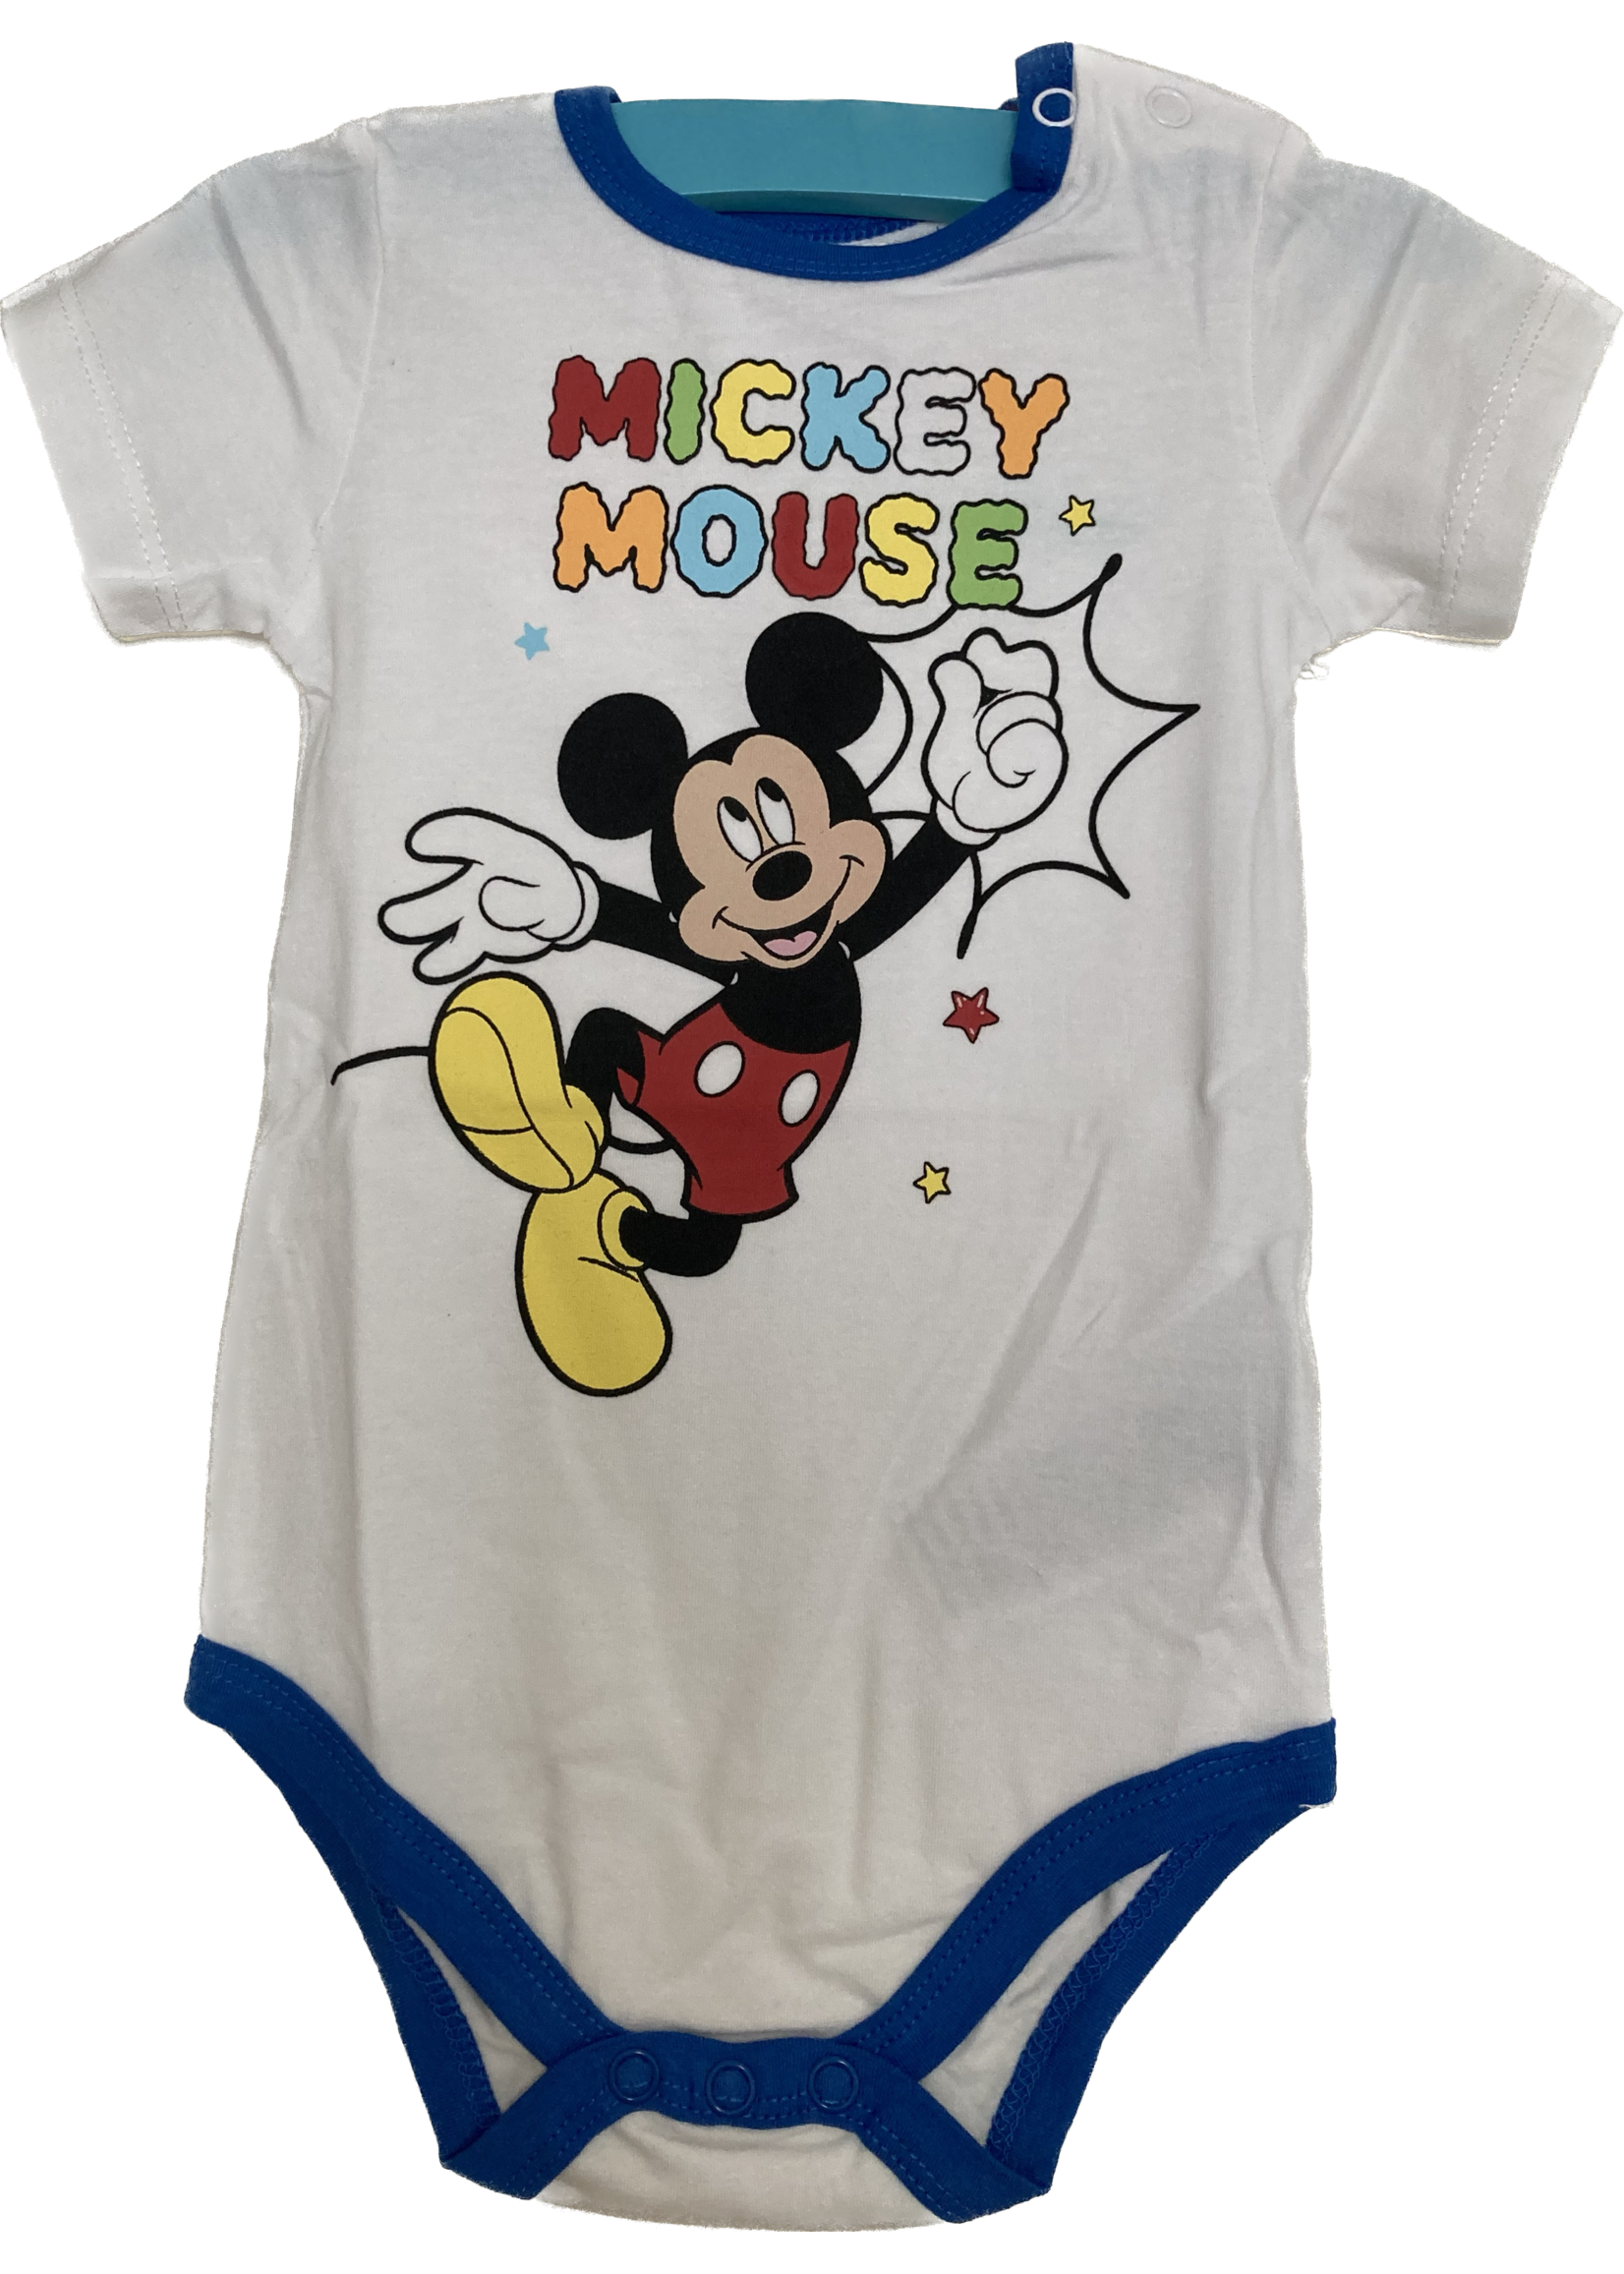 Disney baby Kombinezon z Myszką Miki Disney baby white